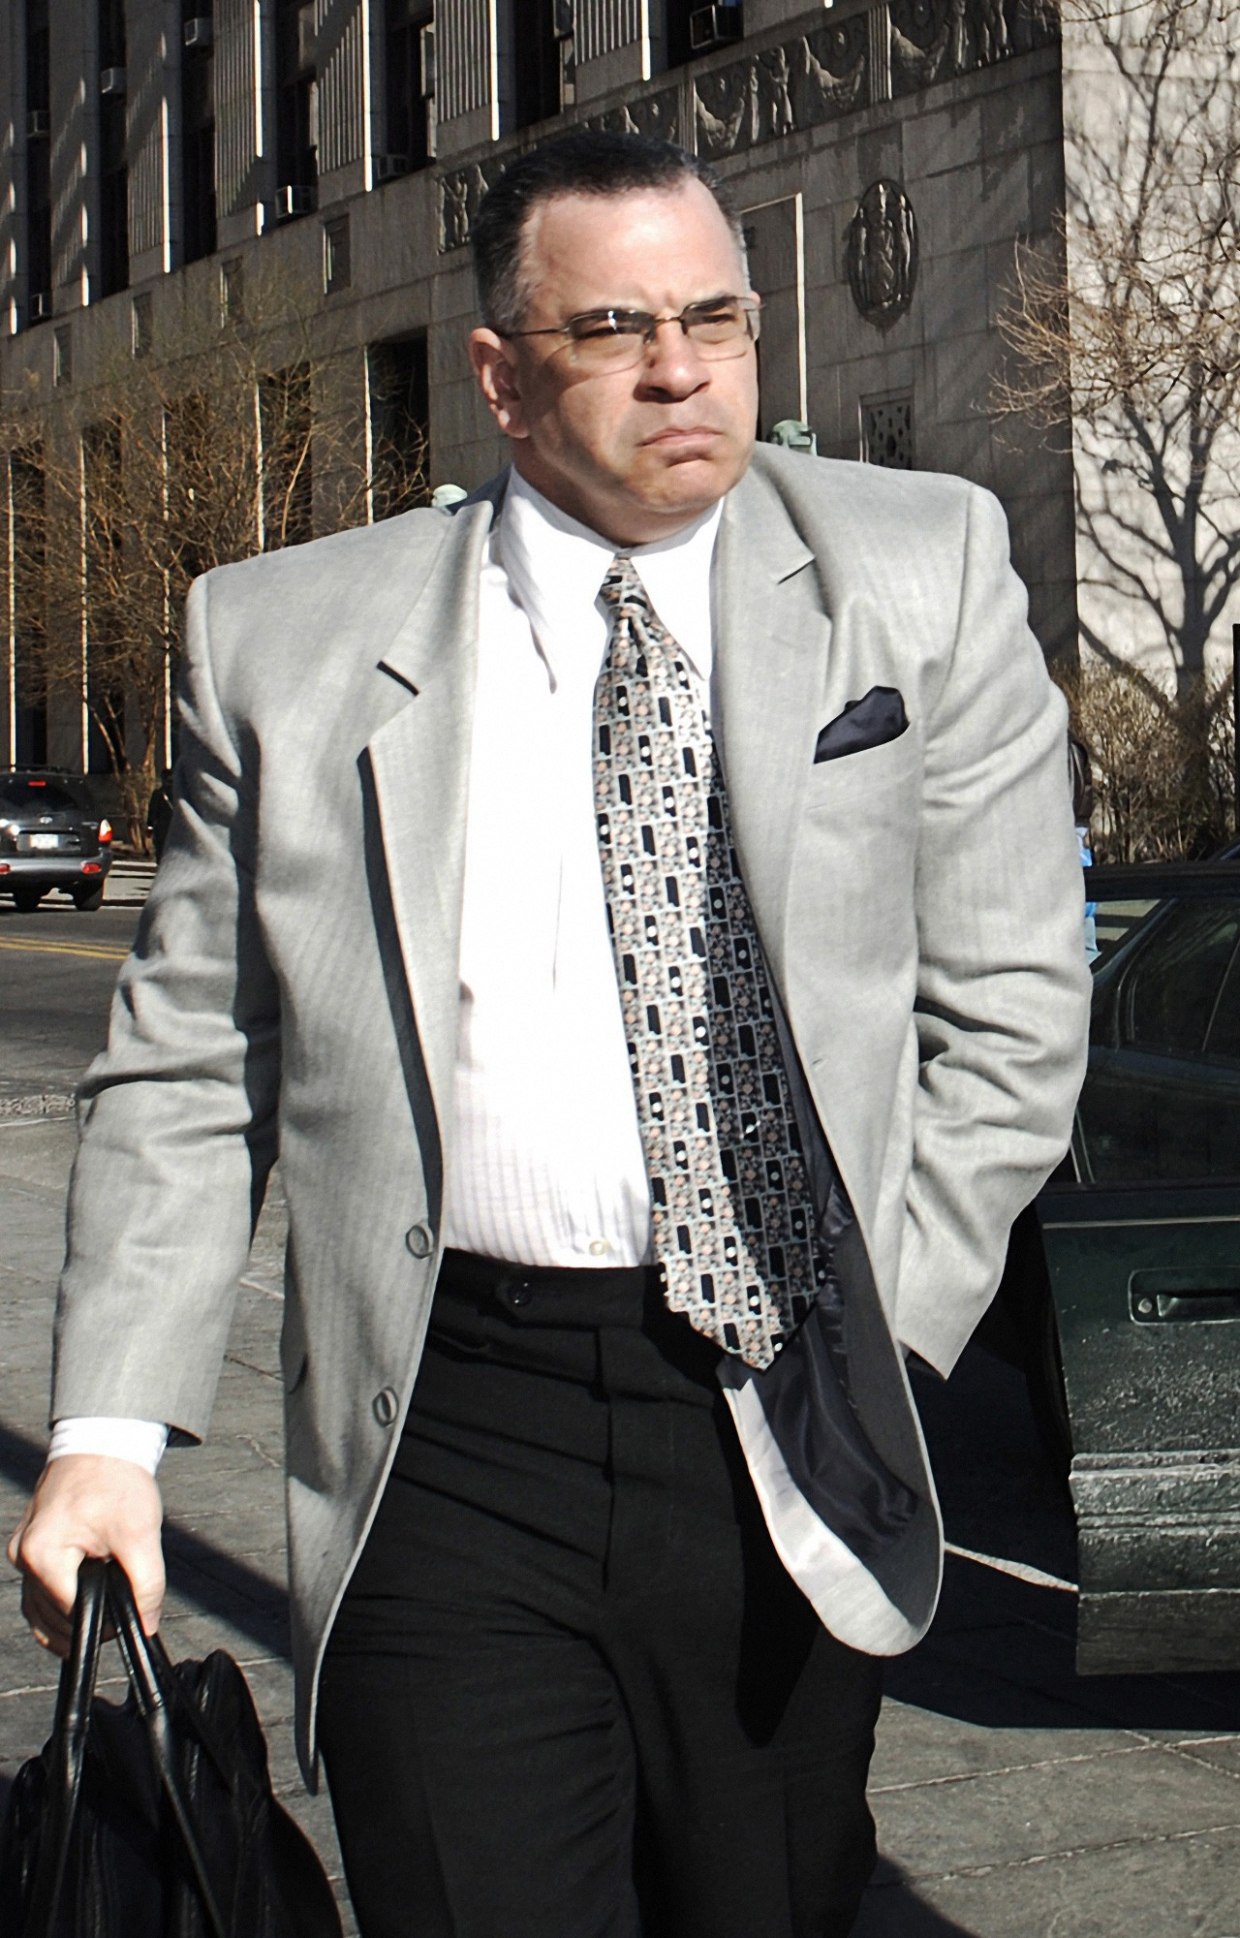 The prosecutor who got John Gotti steps down as judge